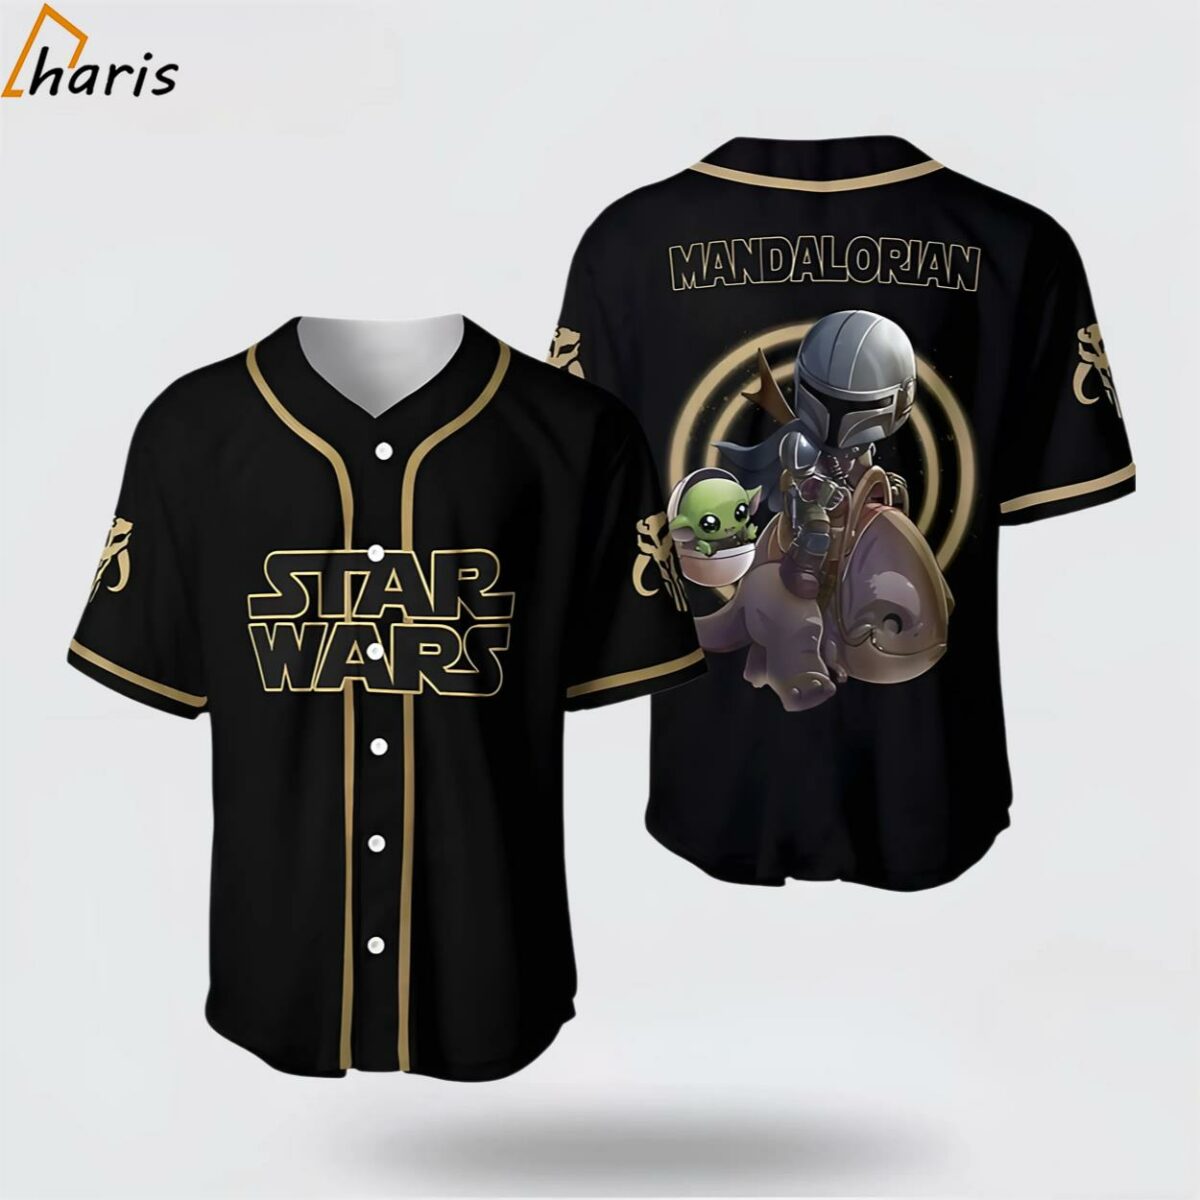 Star Wars Mandalorian Black Brown Disney Unisex Baseball Jersey 1 jersey